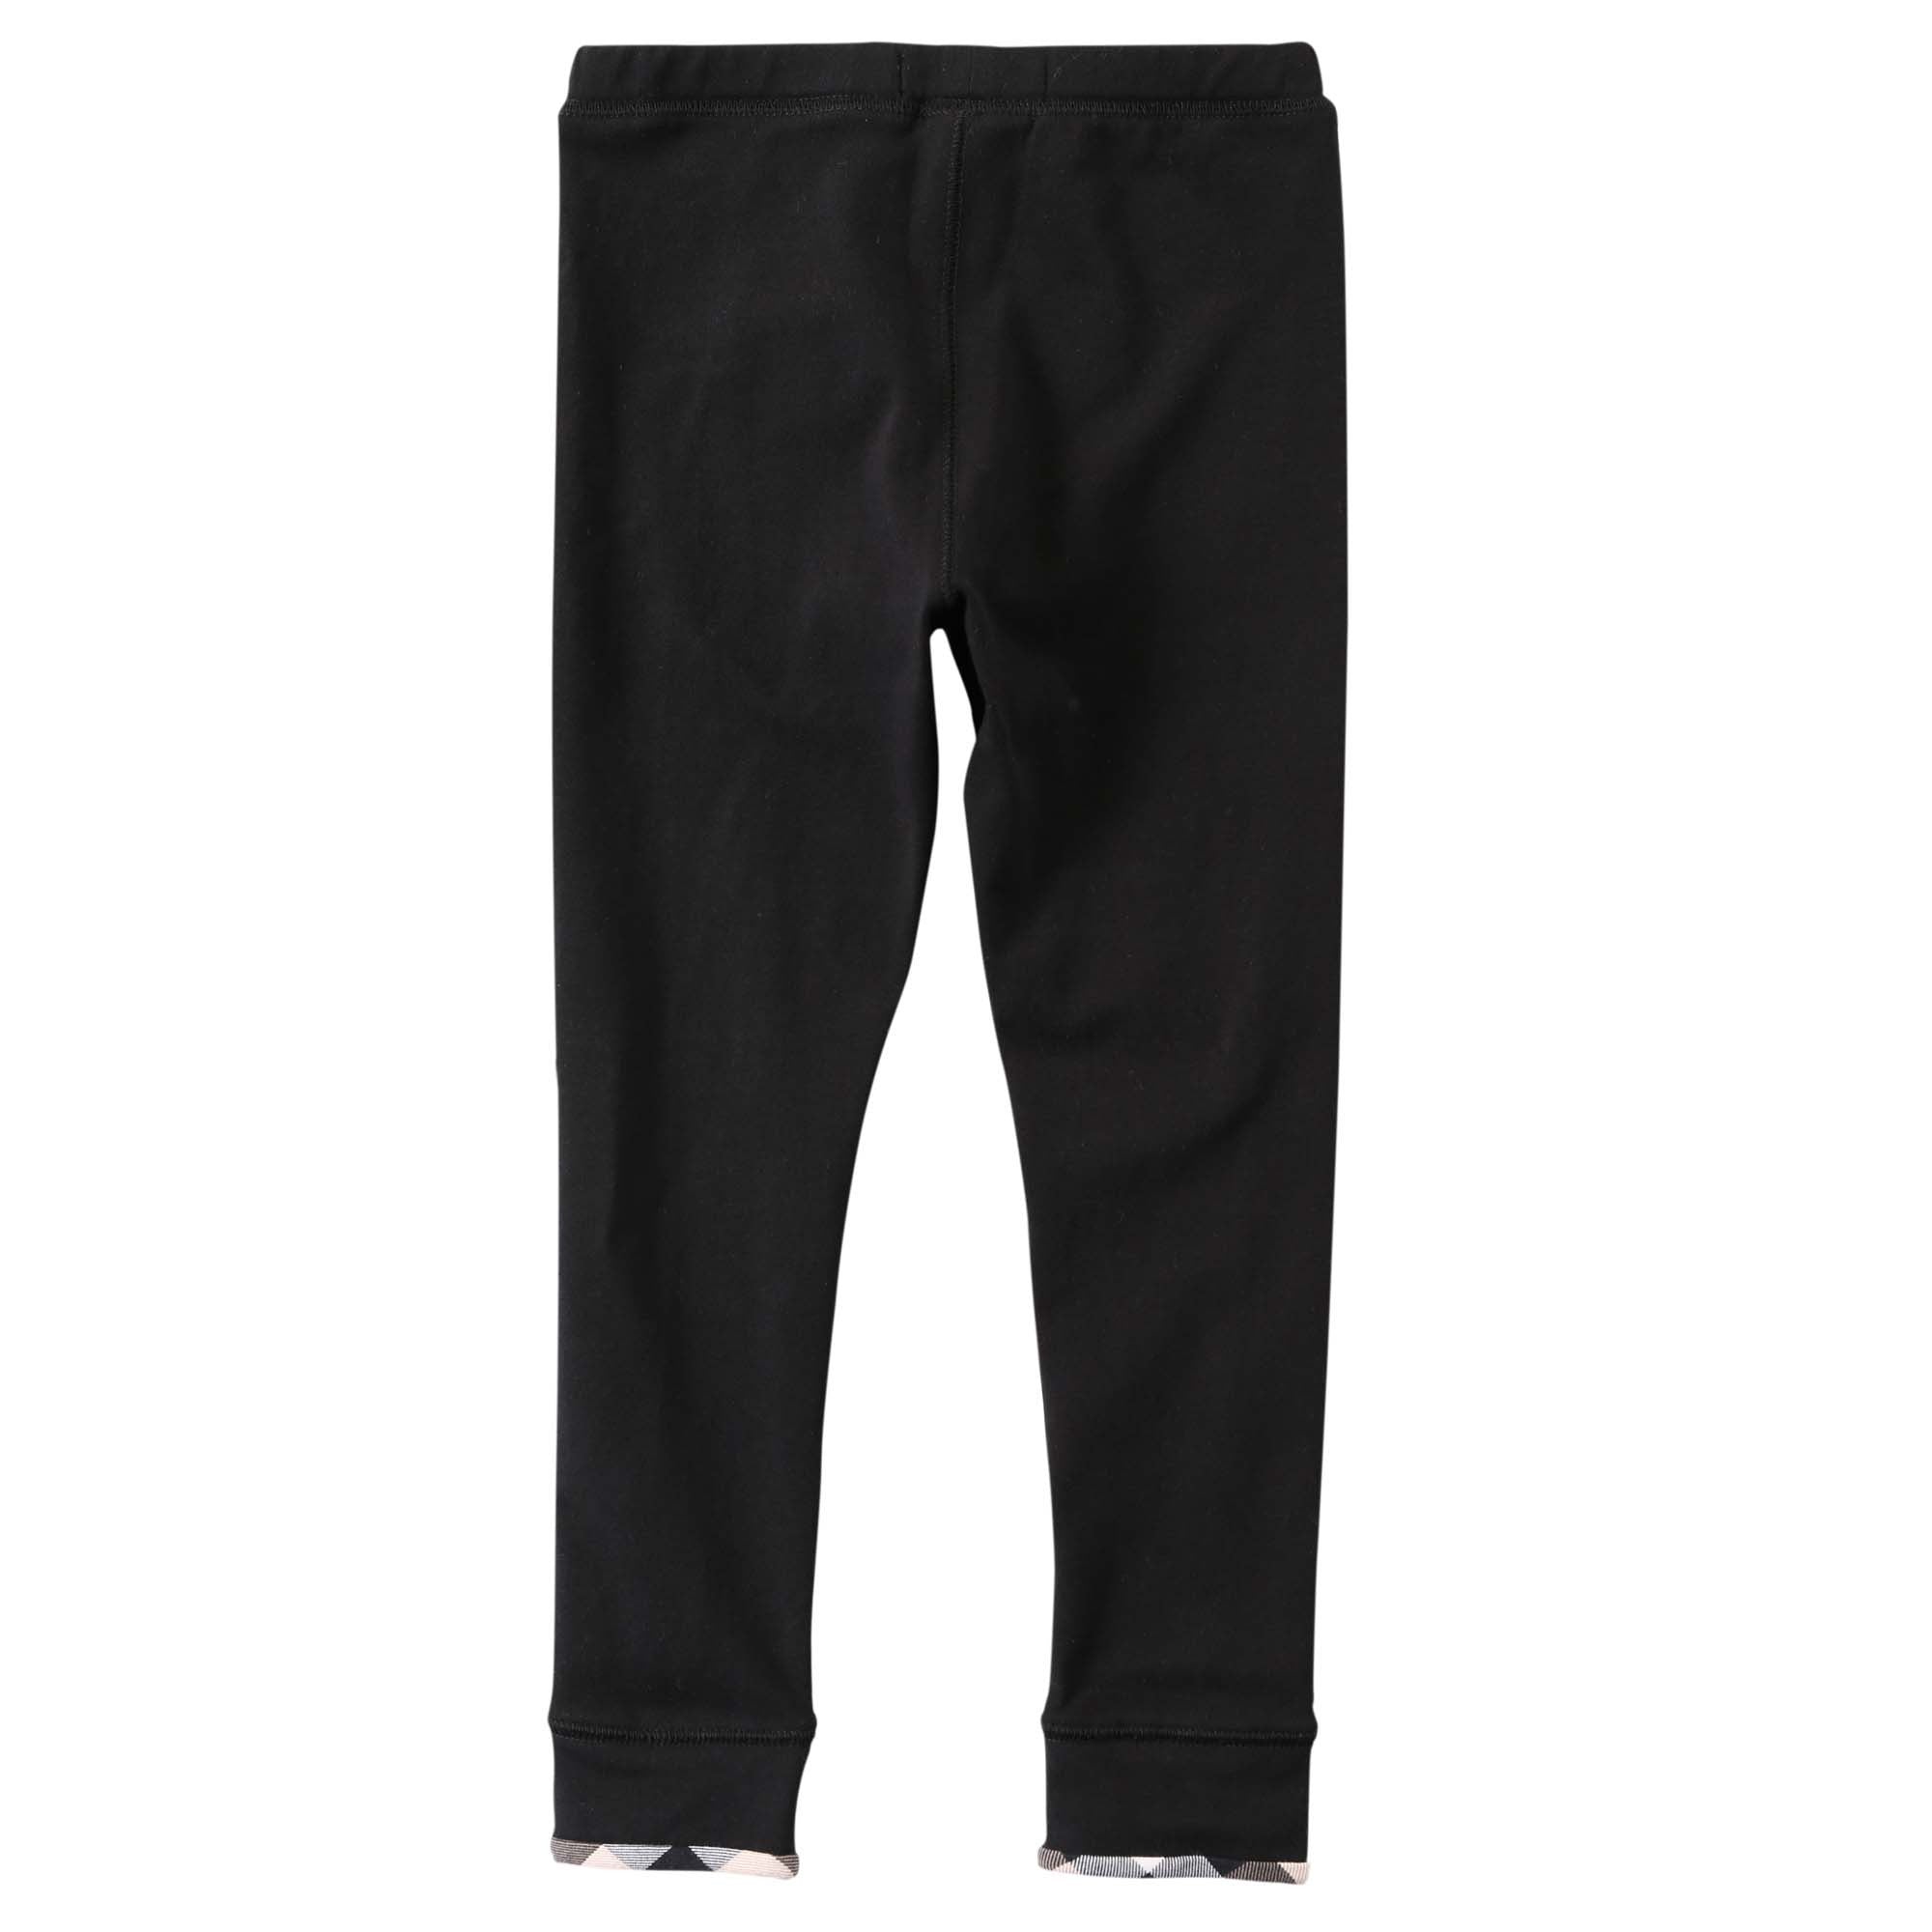 Girls Black Cotton Trouser With Check Cuffs - CÉMAROSE | Children's Fashion Store - 2